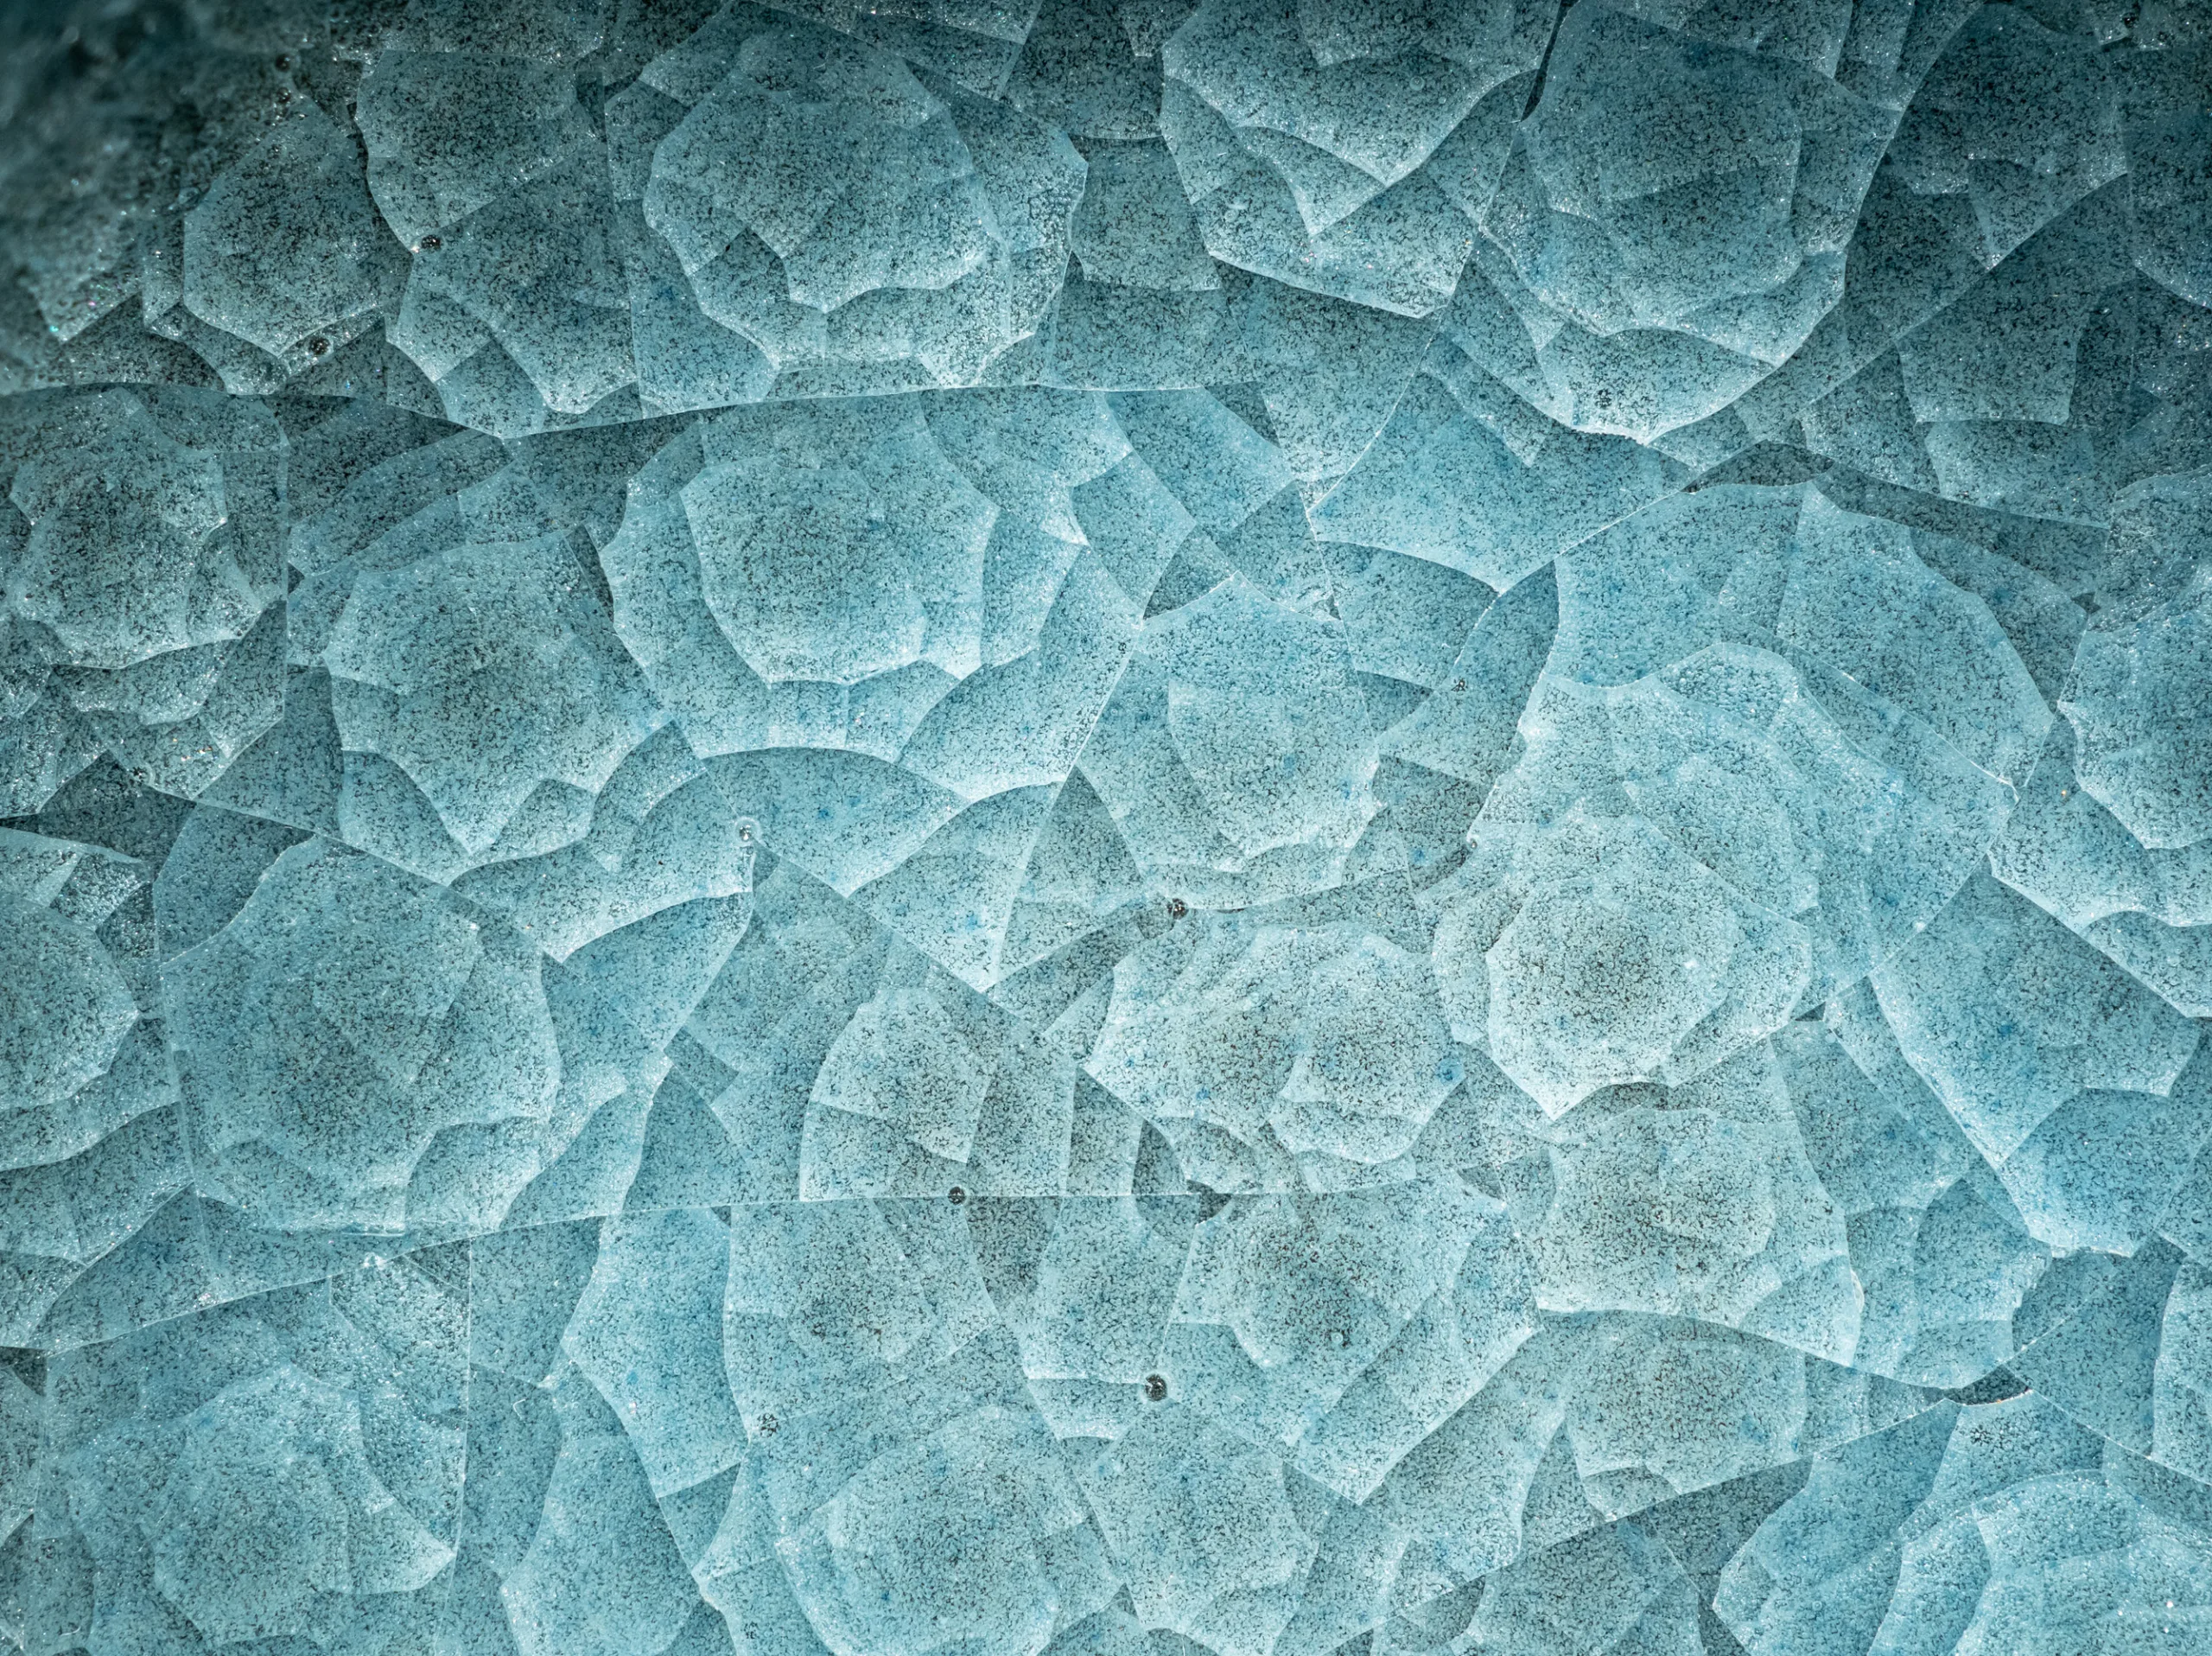 Ice Crackle glaze closeup view